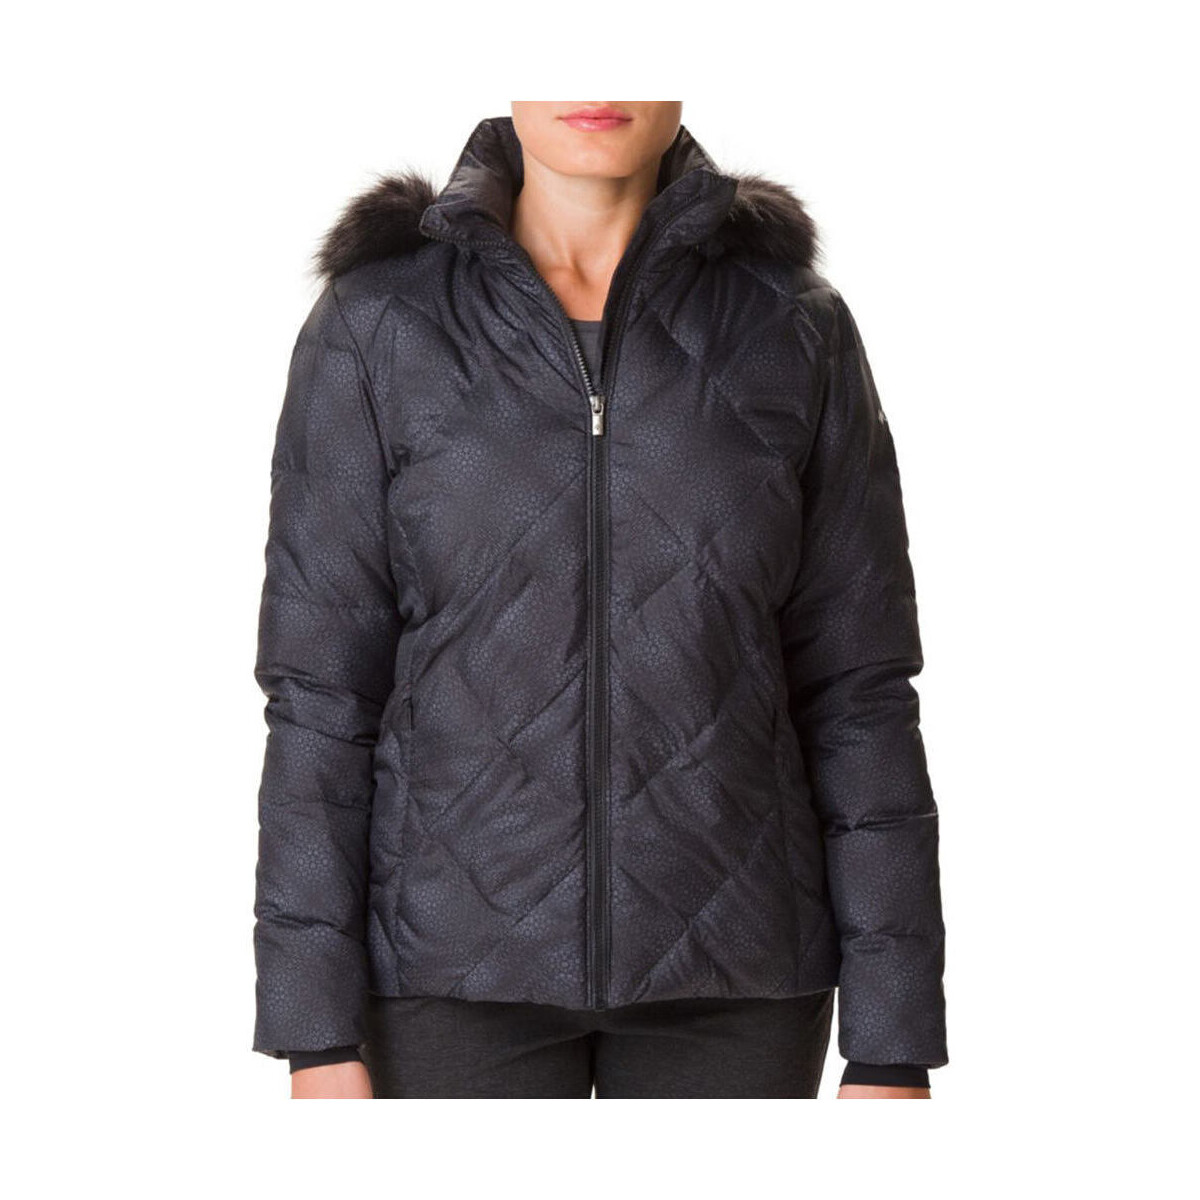 Vêtements Femme Оригинальная ветровка от fila black line jacket big logo Icy Heights II Down Jacket Noir